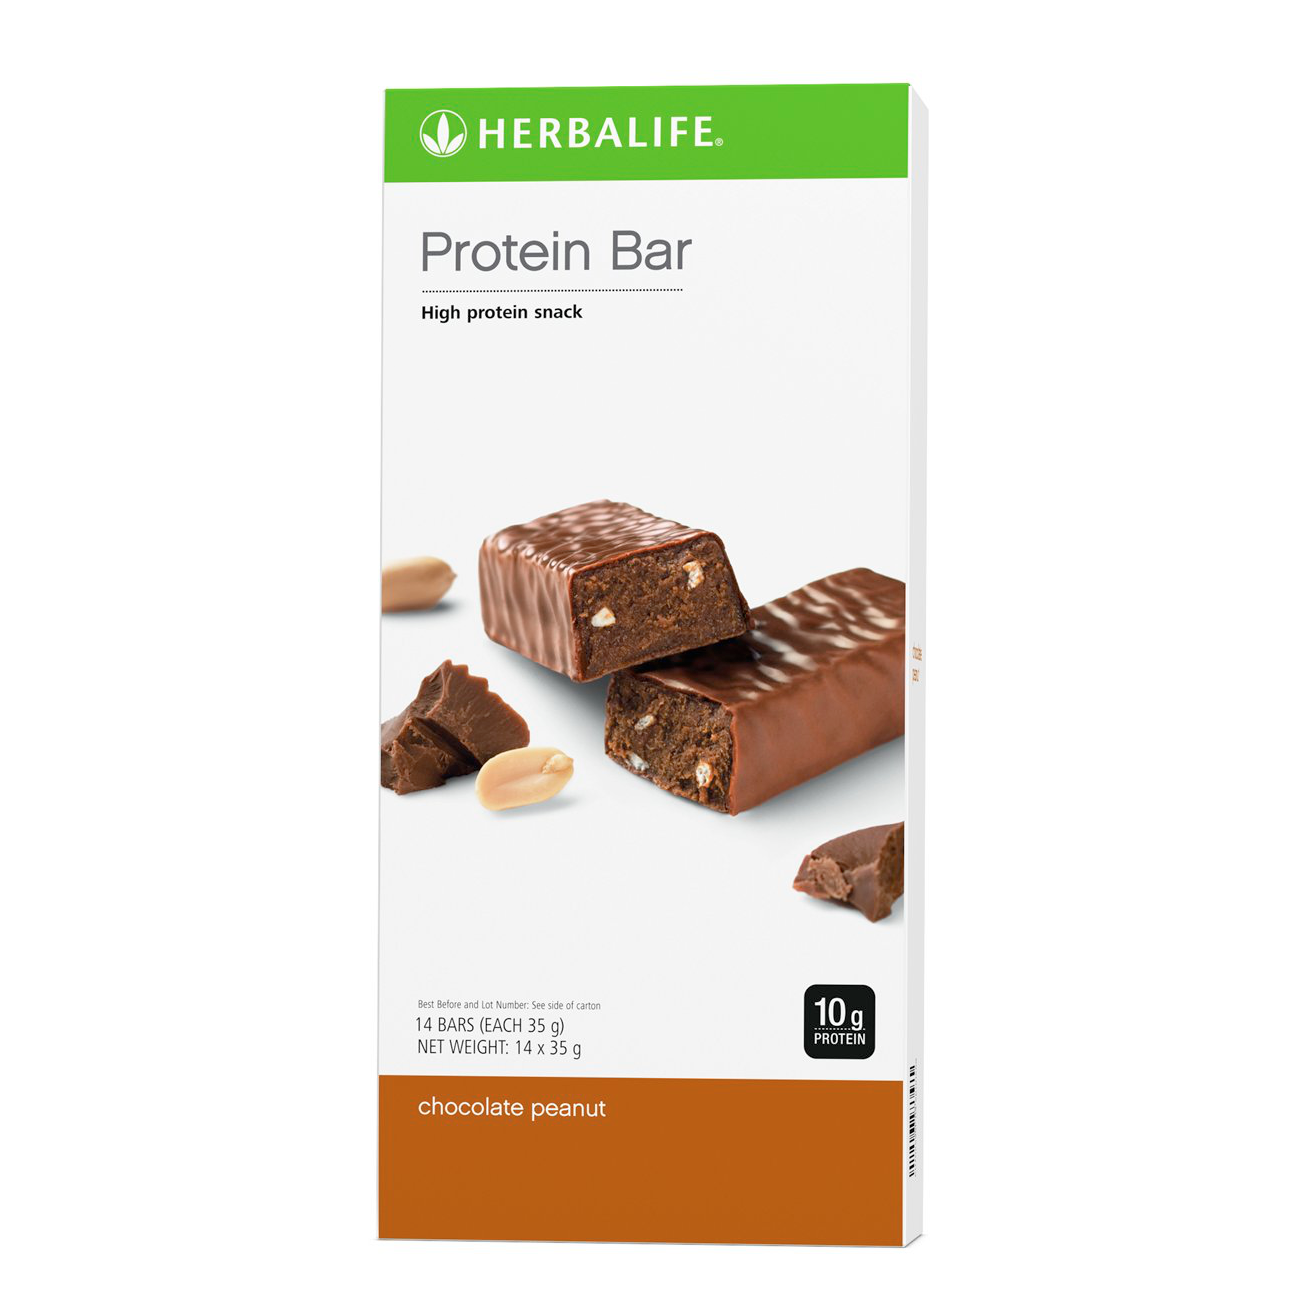 Protein Bars  Chocolate Peanut product shot.